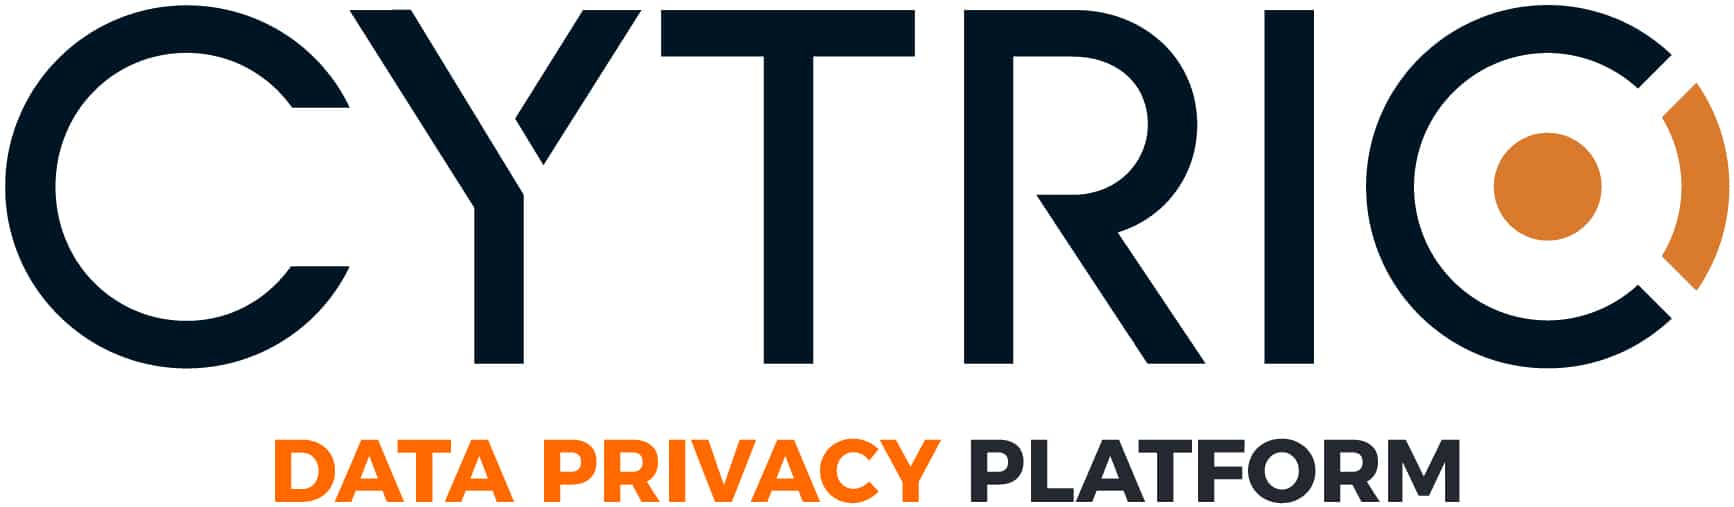 CYTRIO-LOGO-data-privacy-platform.jpg